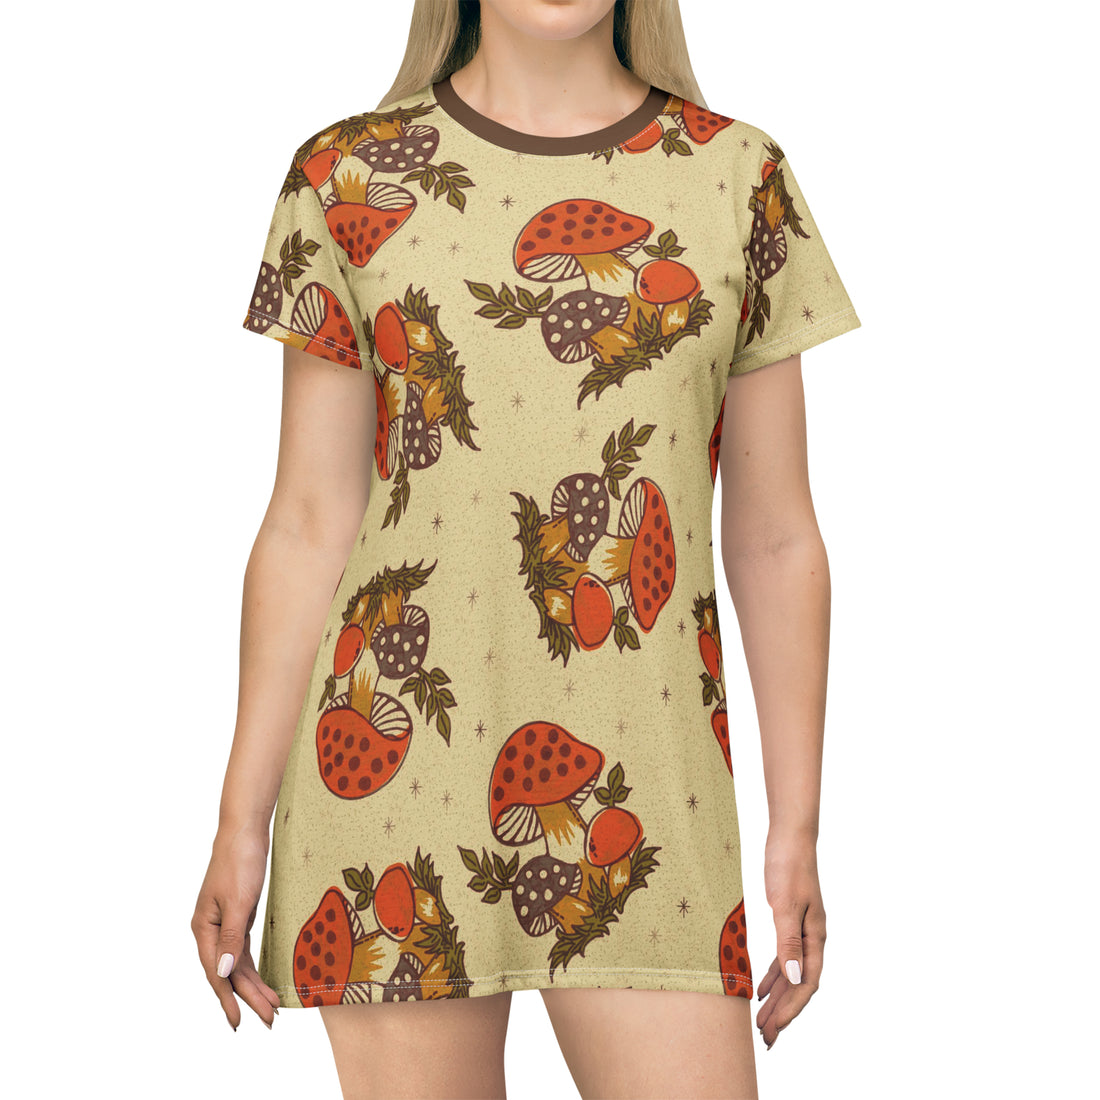 1970s Hippie Clothes, Vintage Merry Mushroom Groovy Retro Party, T-Shirt Dress